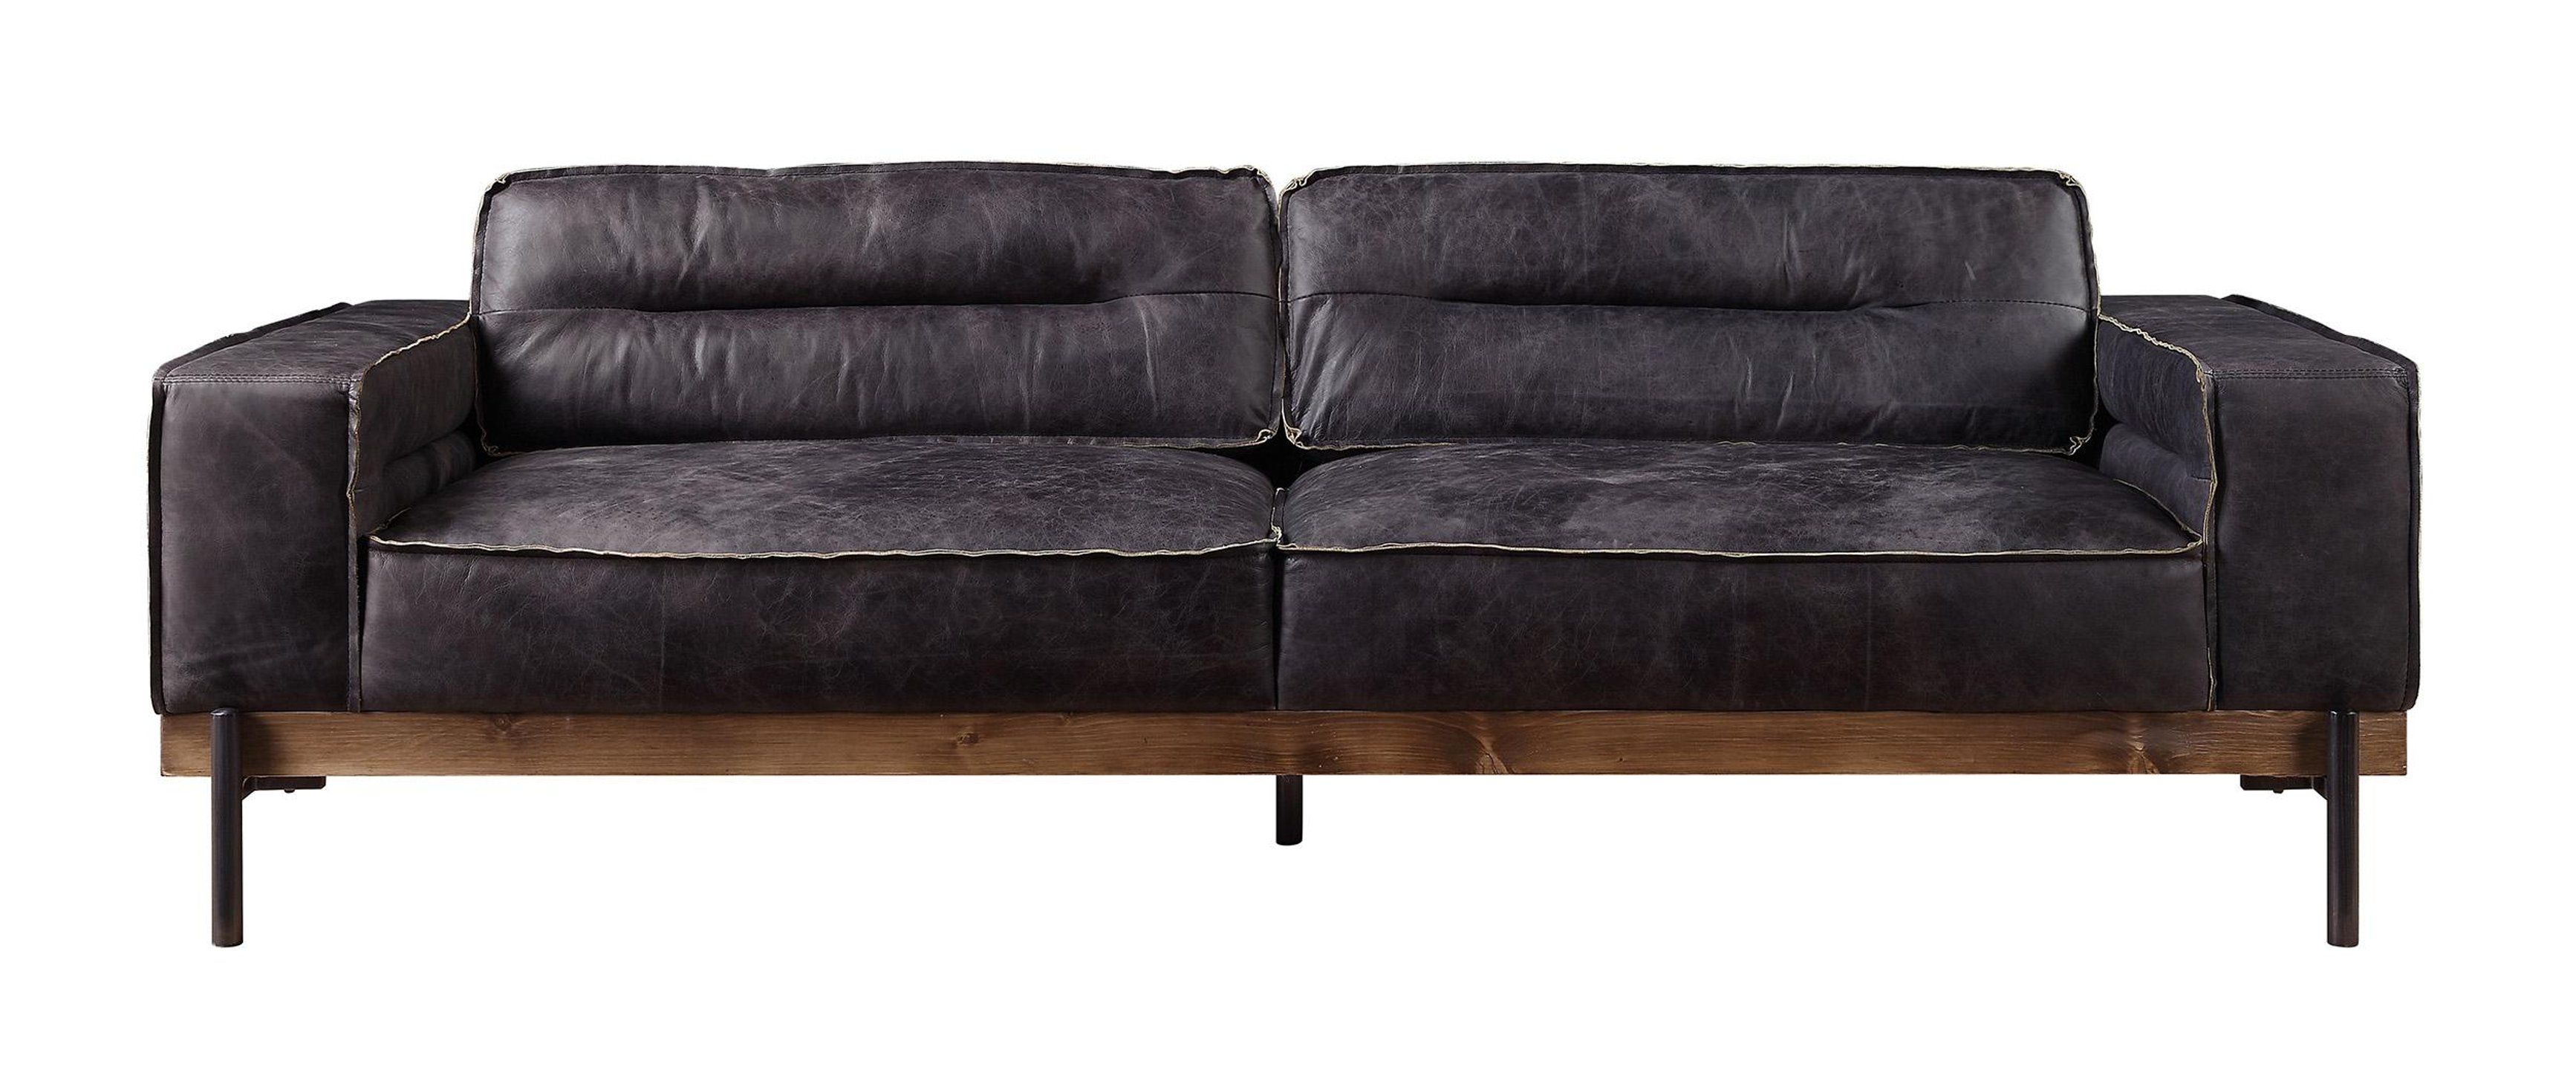 williston forge buda leather sofa